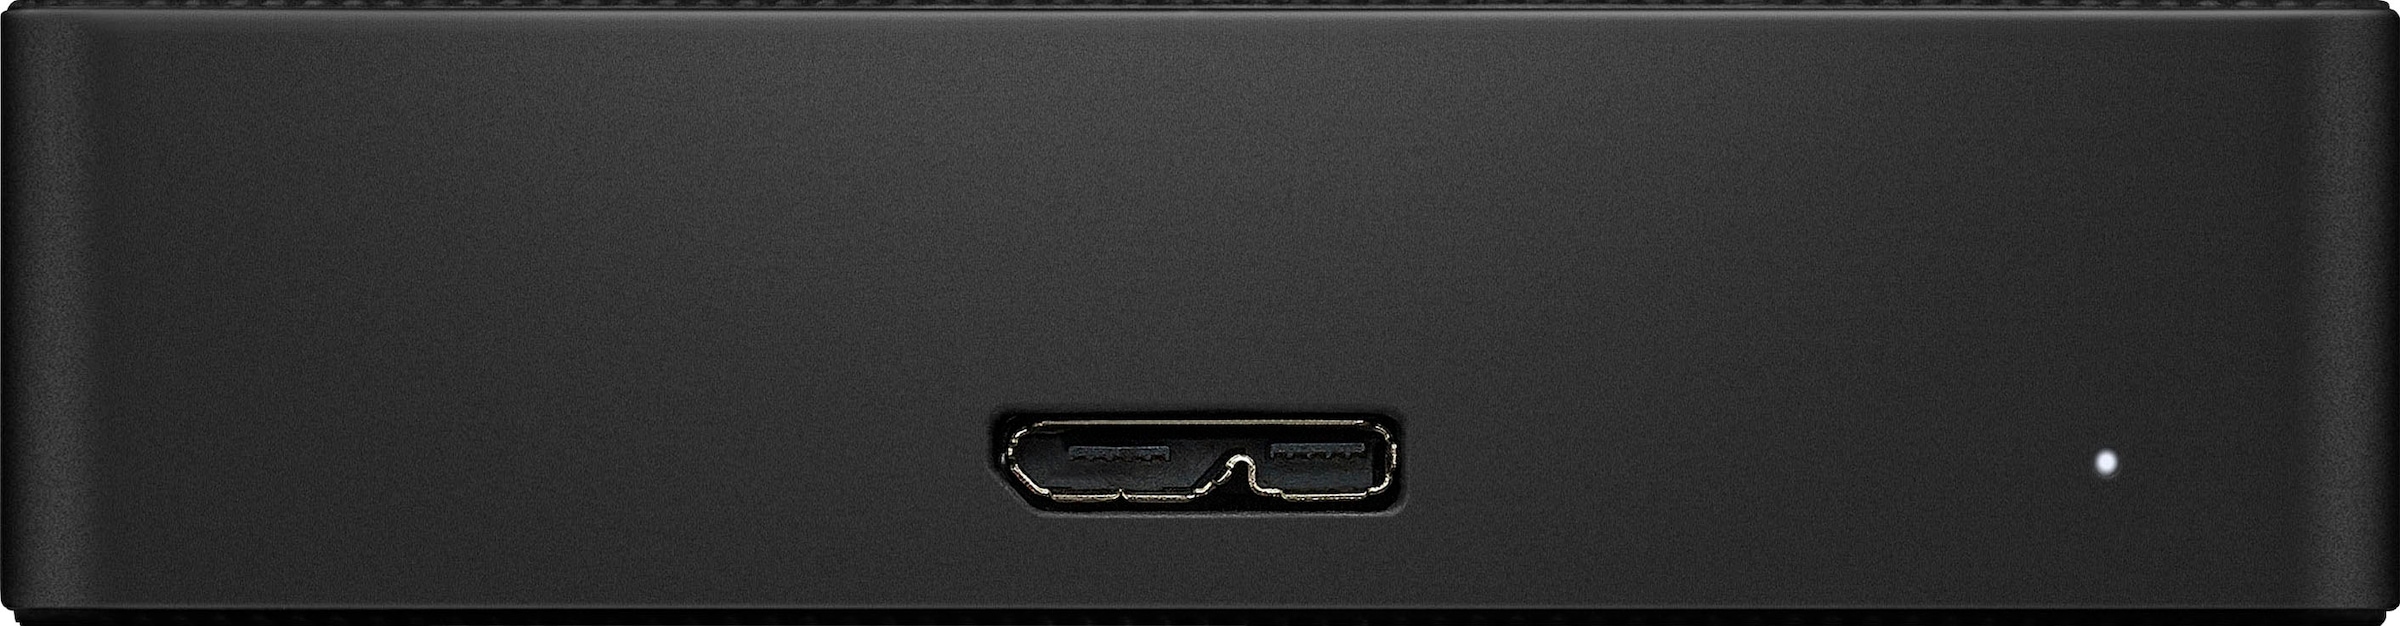 Seagate externe HDD-Festplatte »Expansion Portable«, 2,5 Zoll, Anschluss  USB 3.0 | BAUR